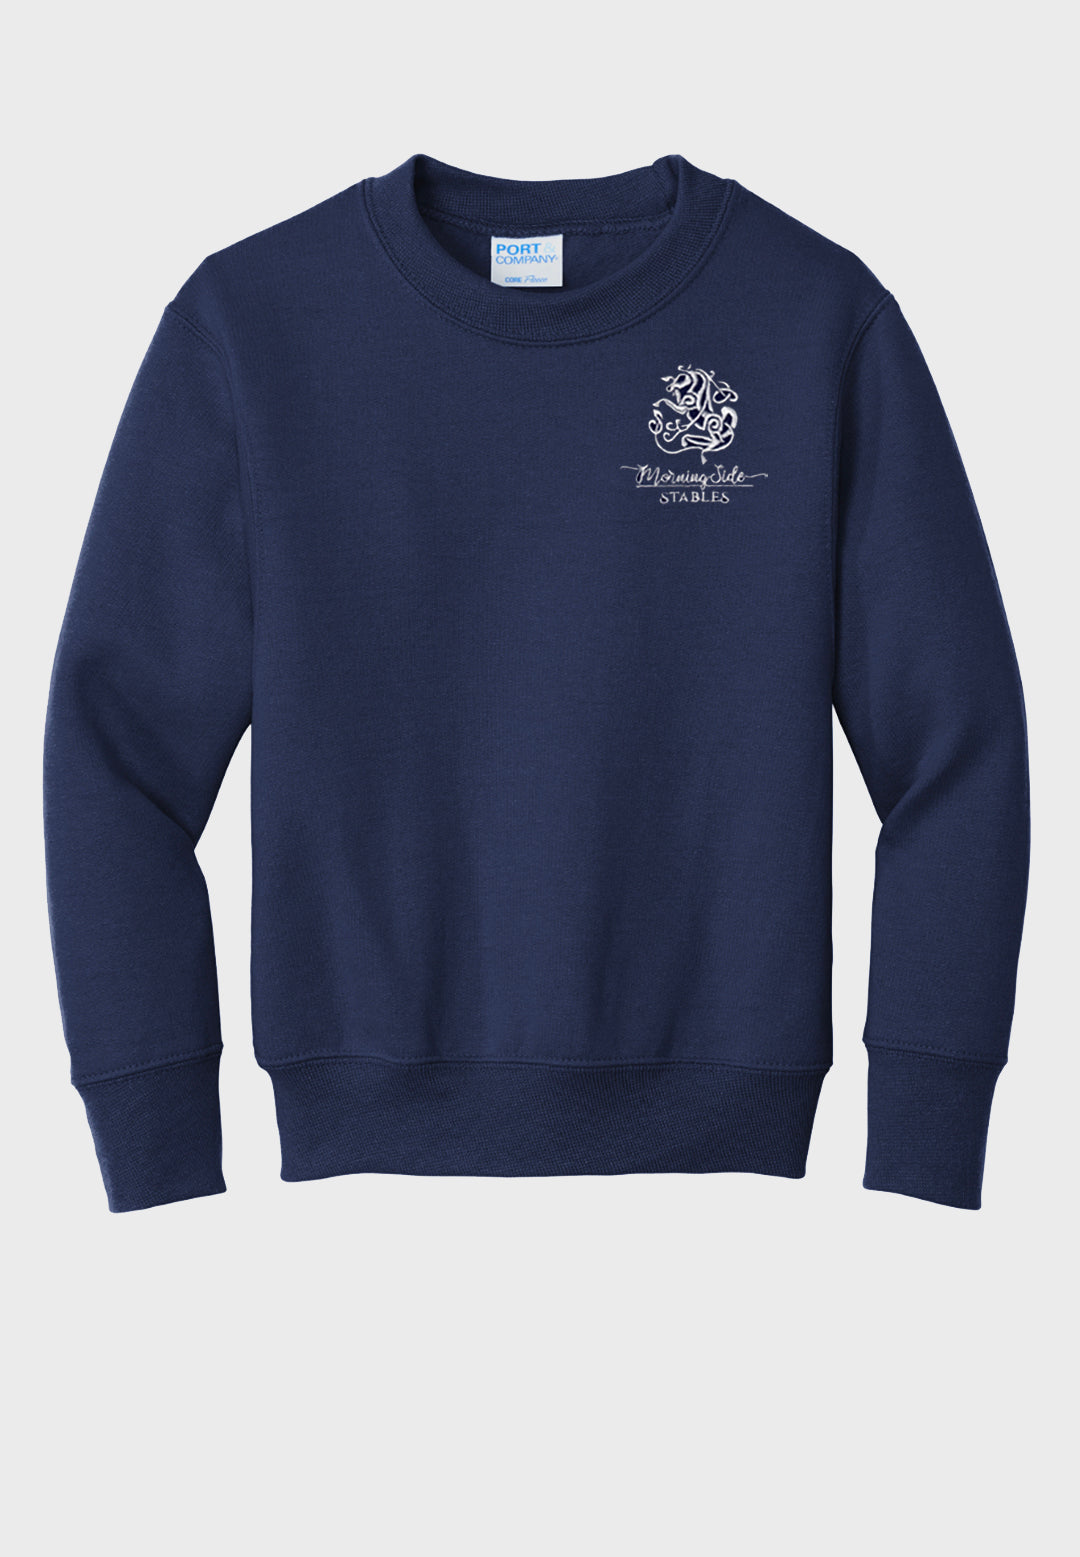 Morning Side Stables Port & Company® Youth Core Fleece Crewneck Sweatshirt - Navy